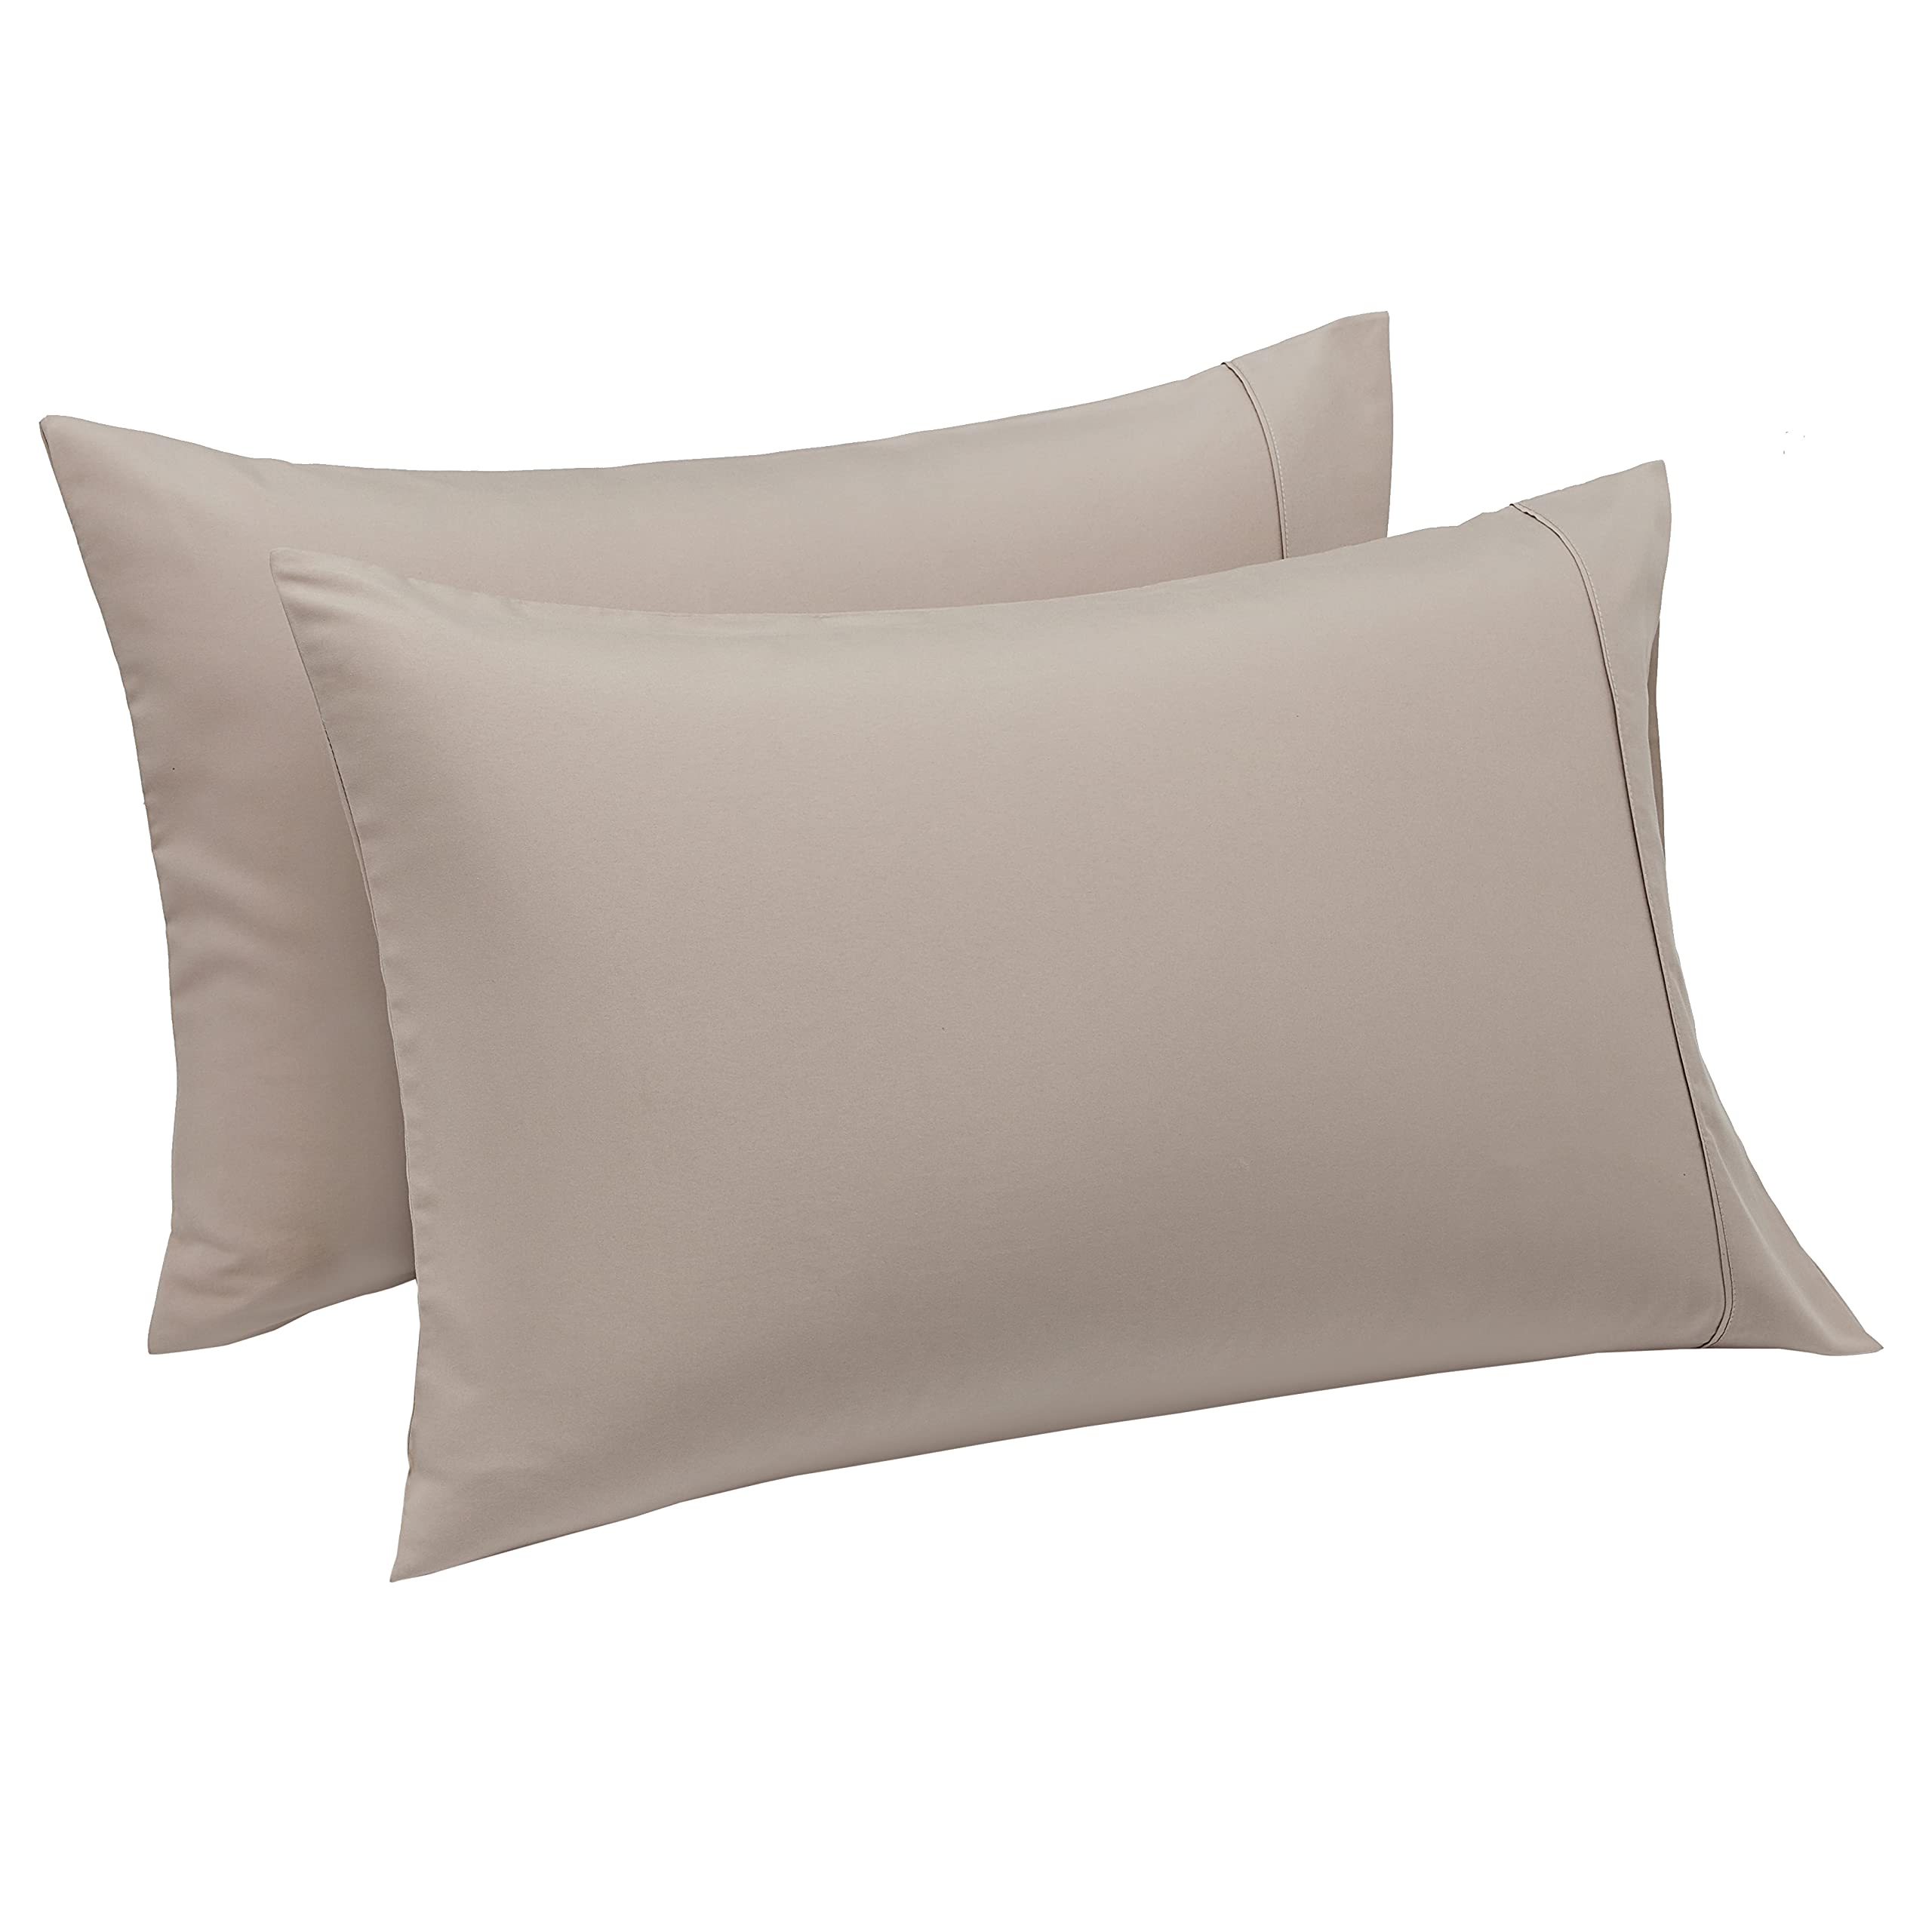 Book Cover Amazon Basics Lightweight Super Soft Easy Care Microfiber Pillowcases - 2-Pack, Standard, Taupe Standard Pillowcases Taupe